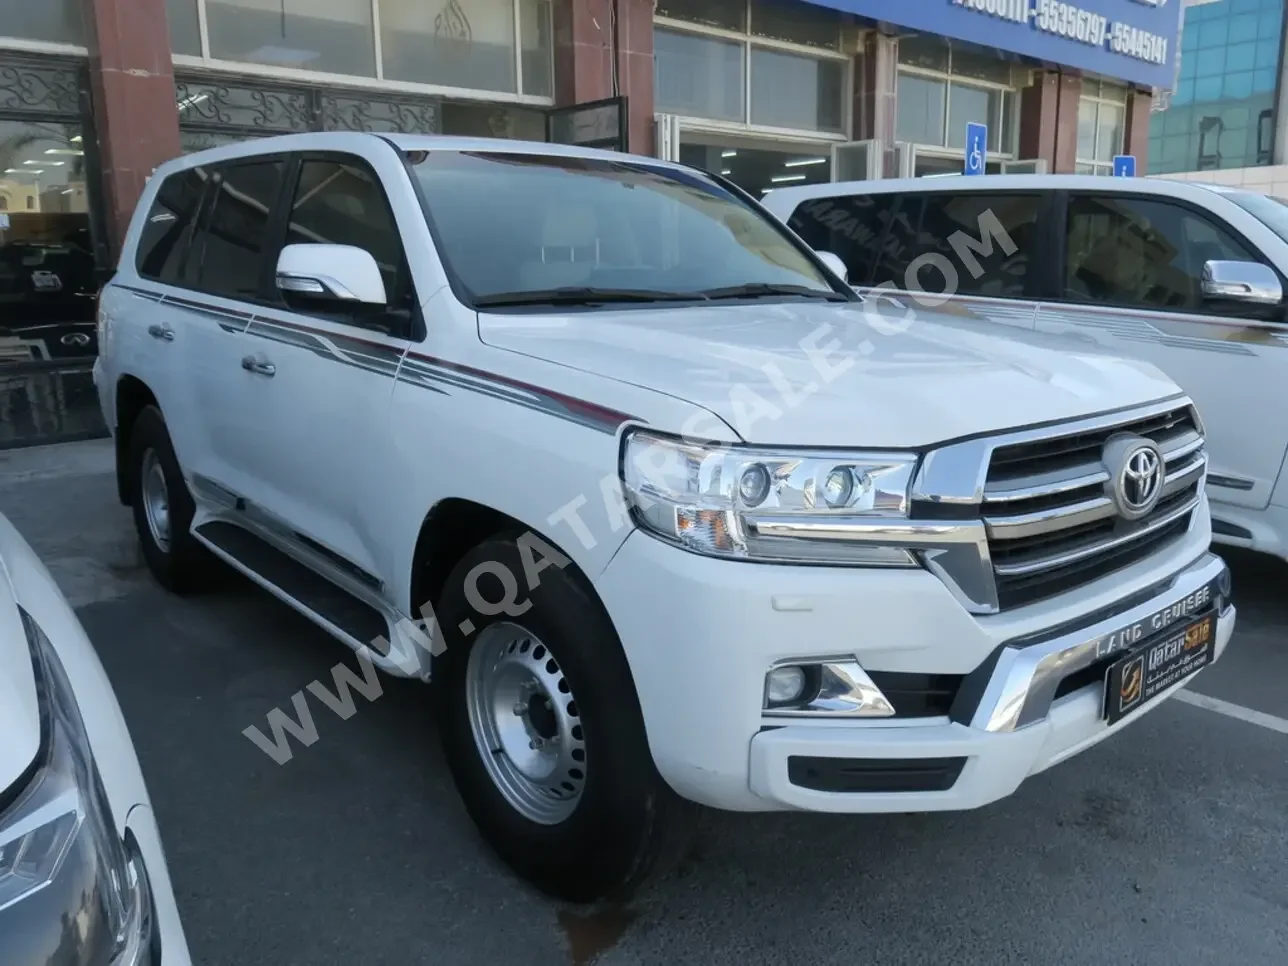 Toyota  Land Cruiser  GXR  2020  Automatic  104,000 Km  8 Cylinder  Four Wheel Drive (4WD)  SUV  White